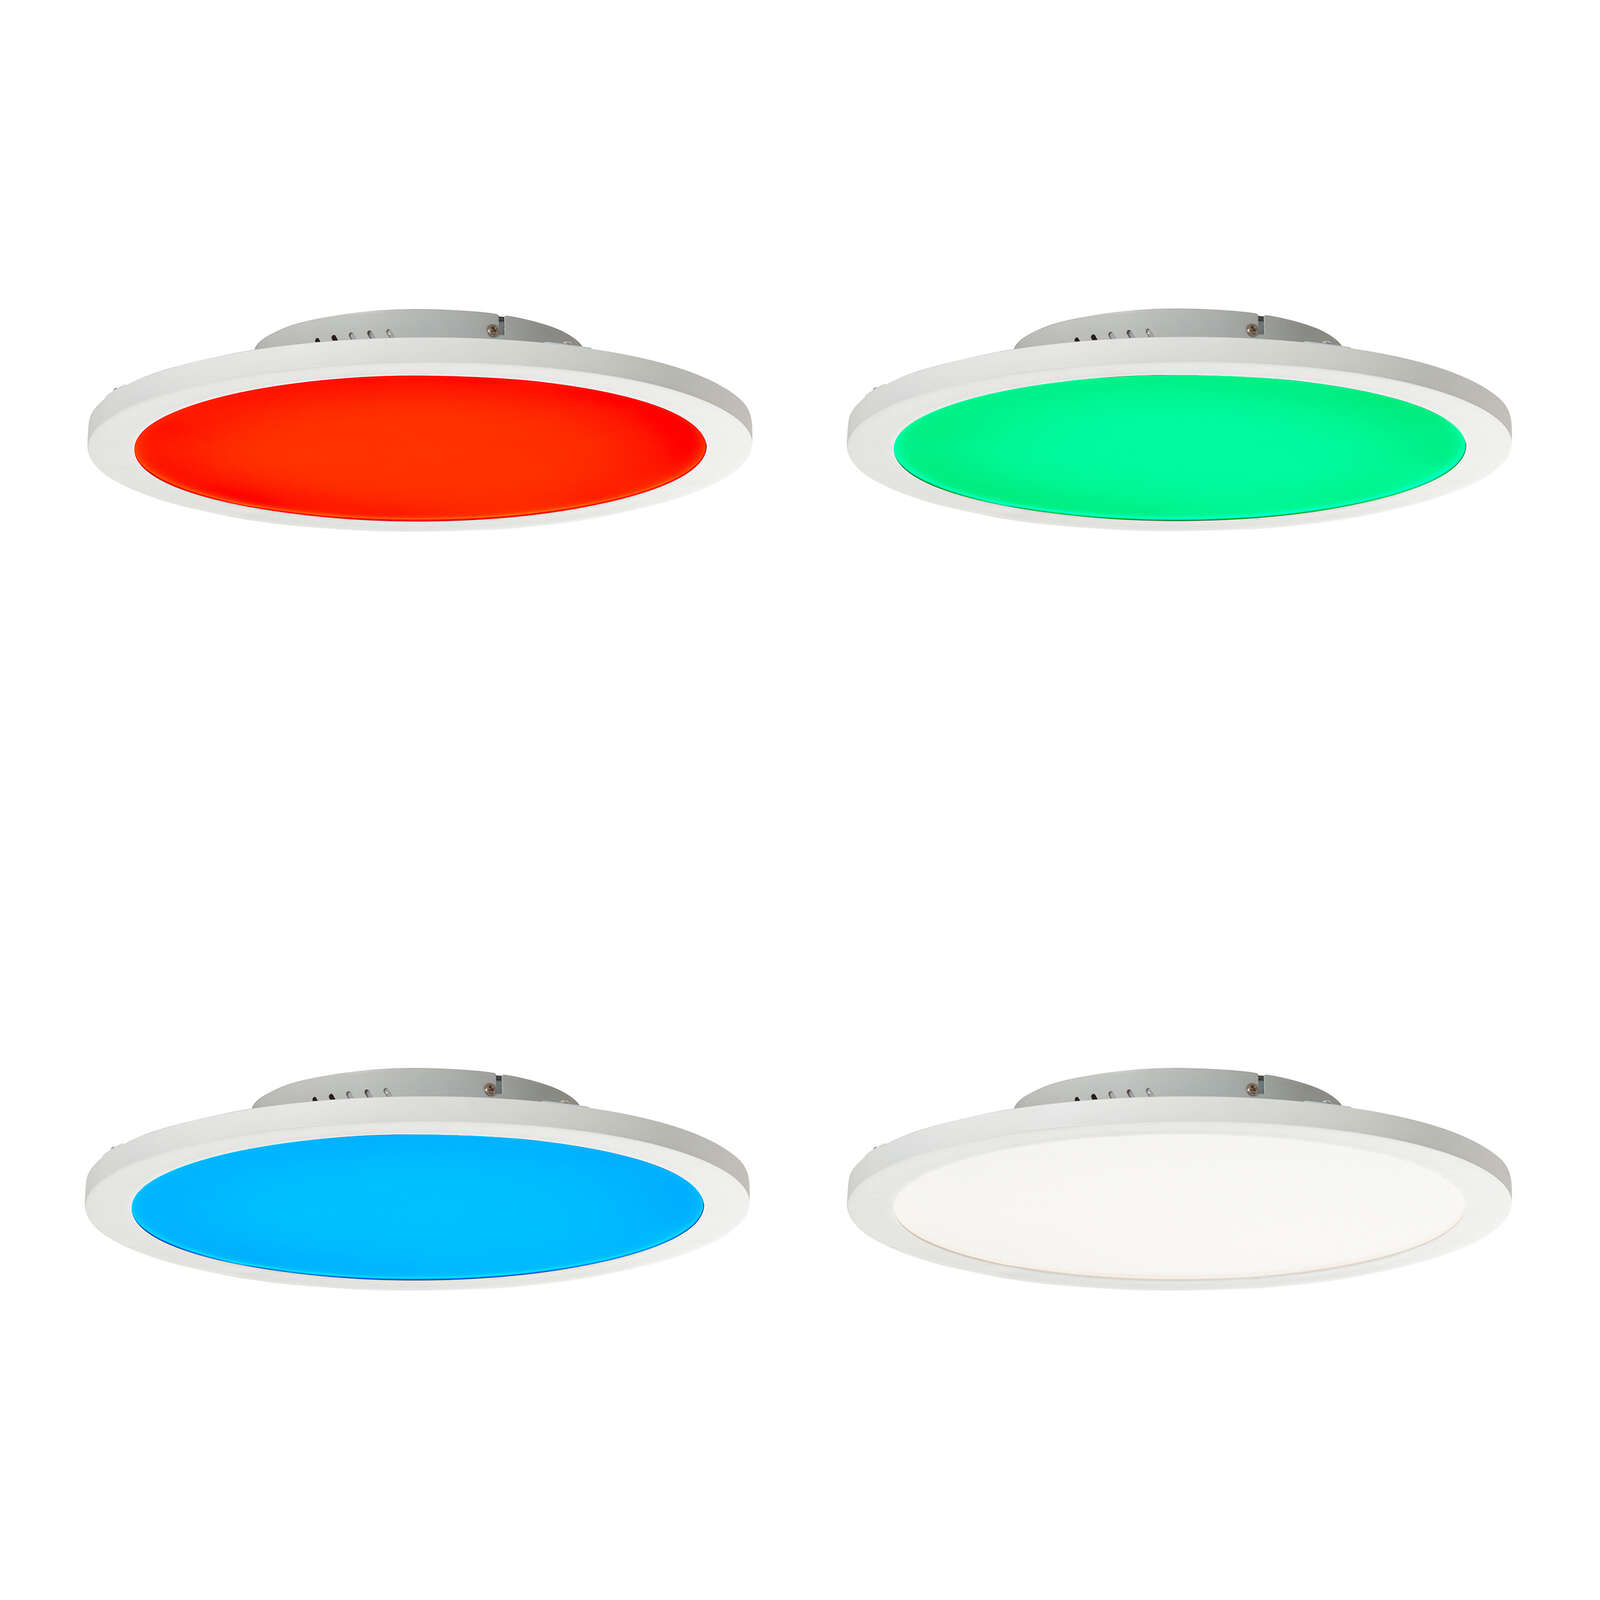             Plastic ceiling light - Aaron 3 - White
        